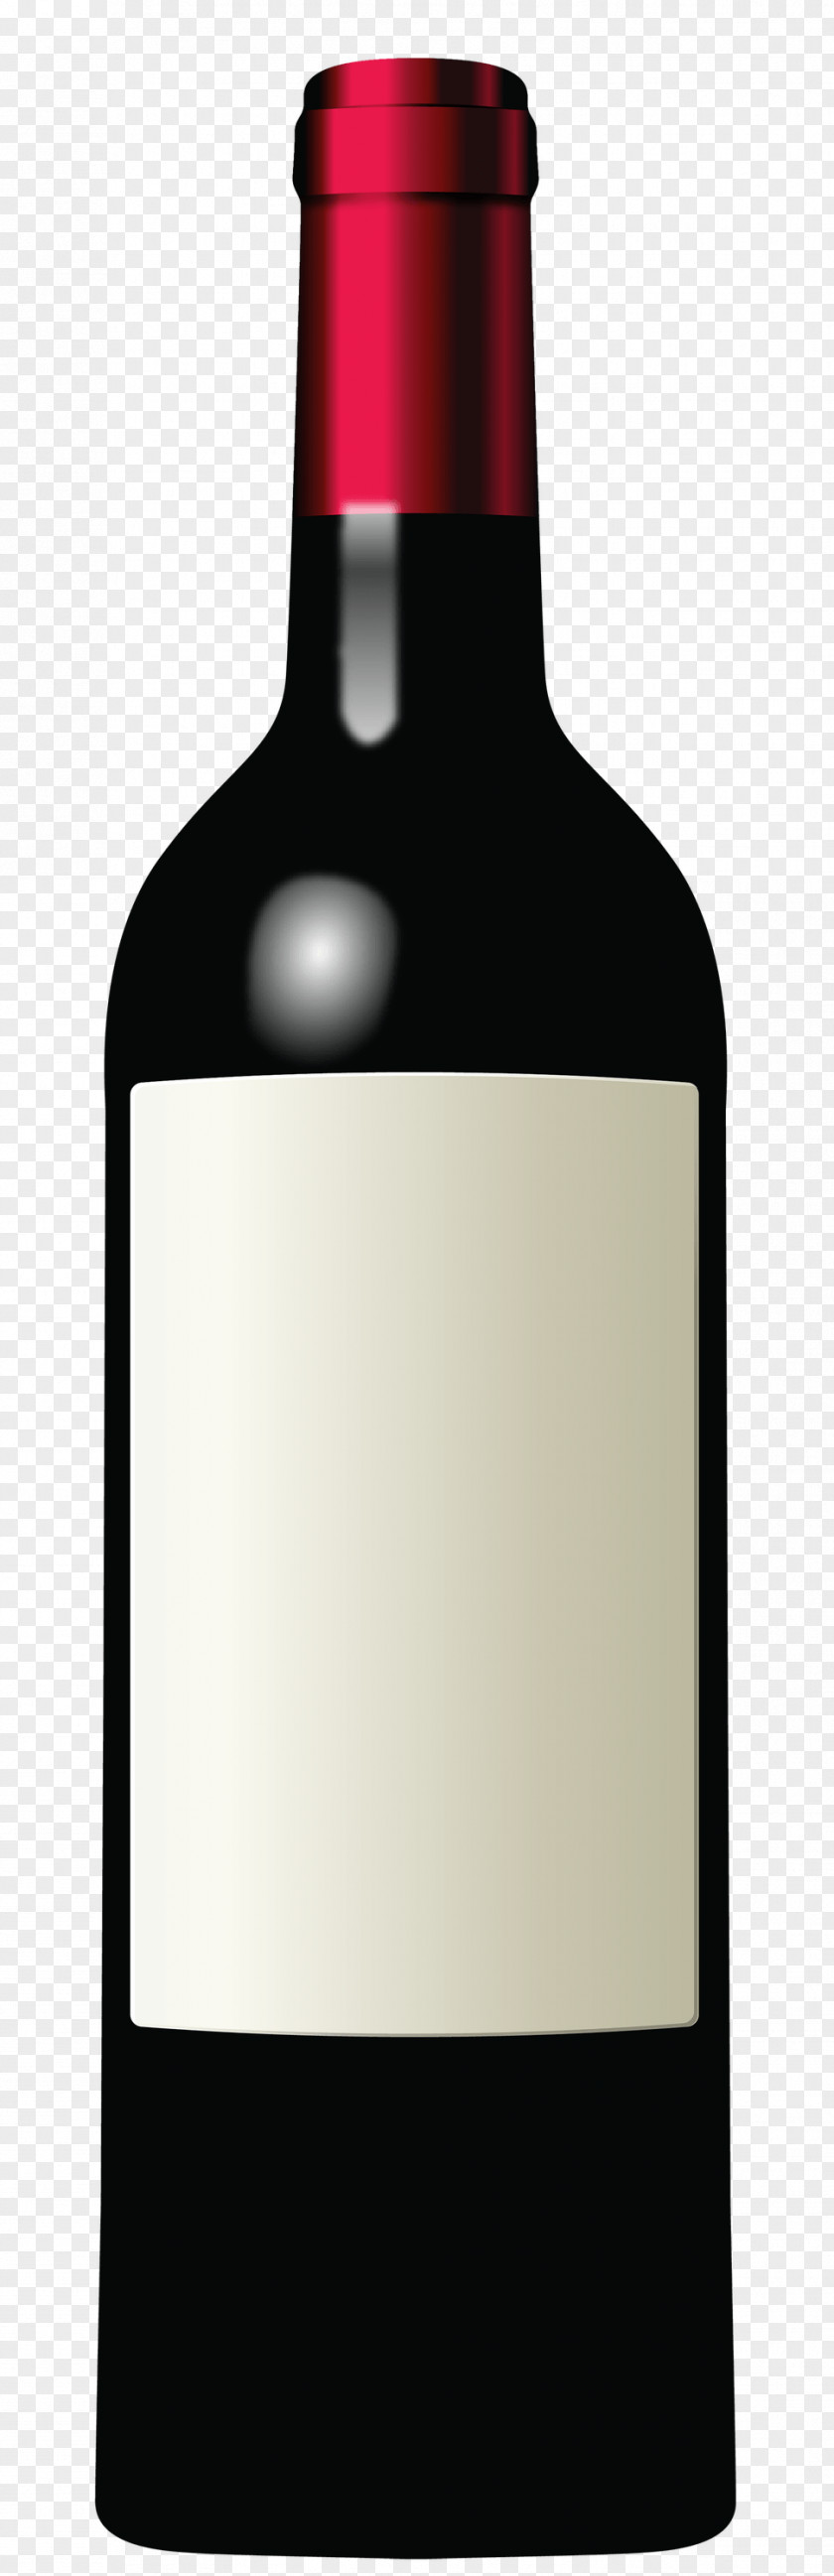 Bottle Wine Red Whitelabel PNG Whitelabel, white labeled wine bottle illustration clipart PNG